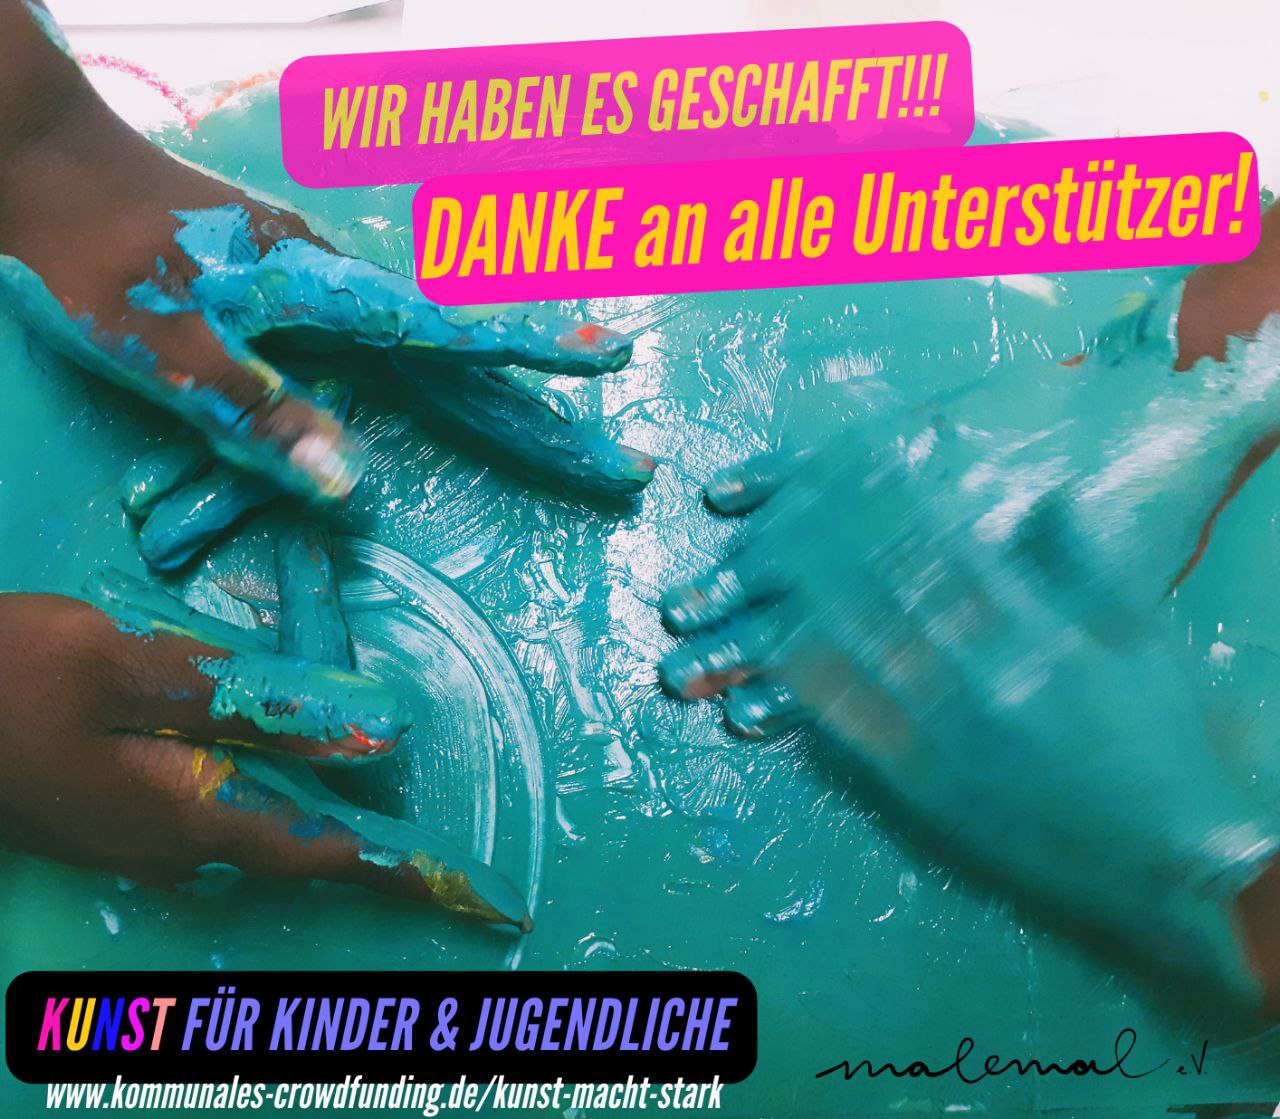 You are currently viewing Crowdfunding Kampagne für Kindermalkurse in der Messestadt-Riem